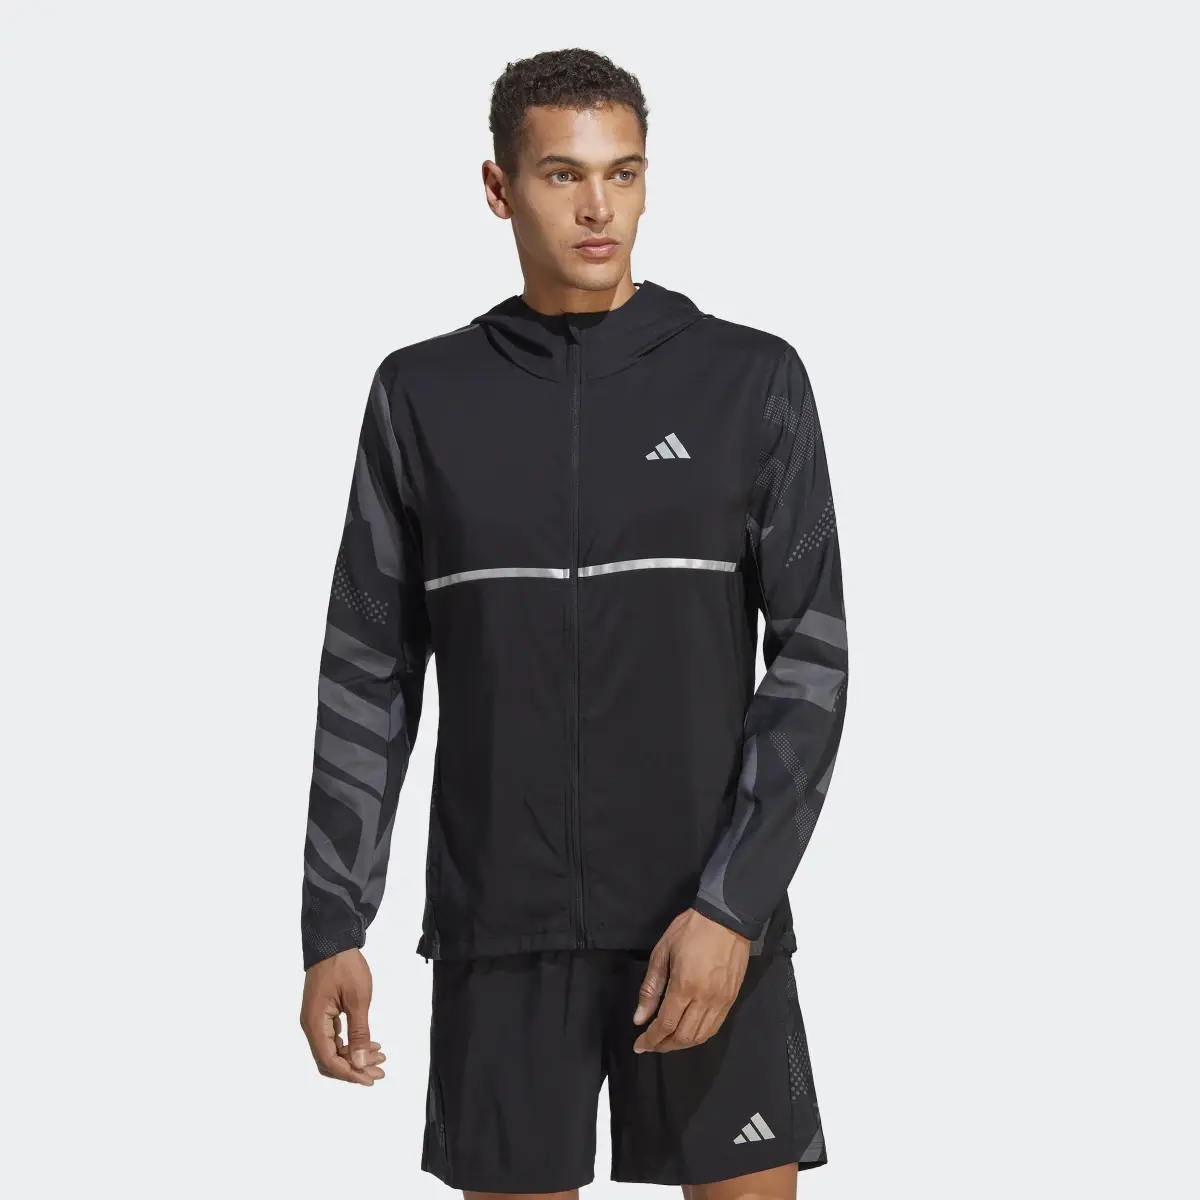 Adidas Own the Run Seasonal Jacket. 2